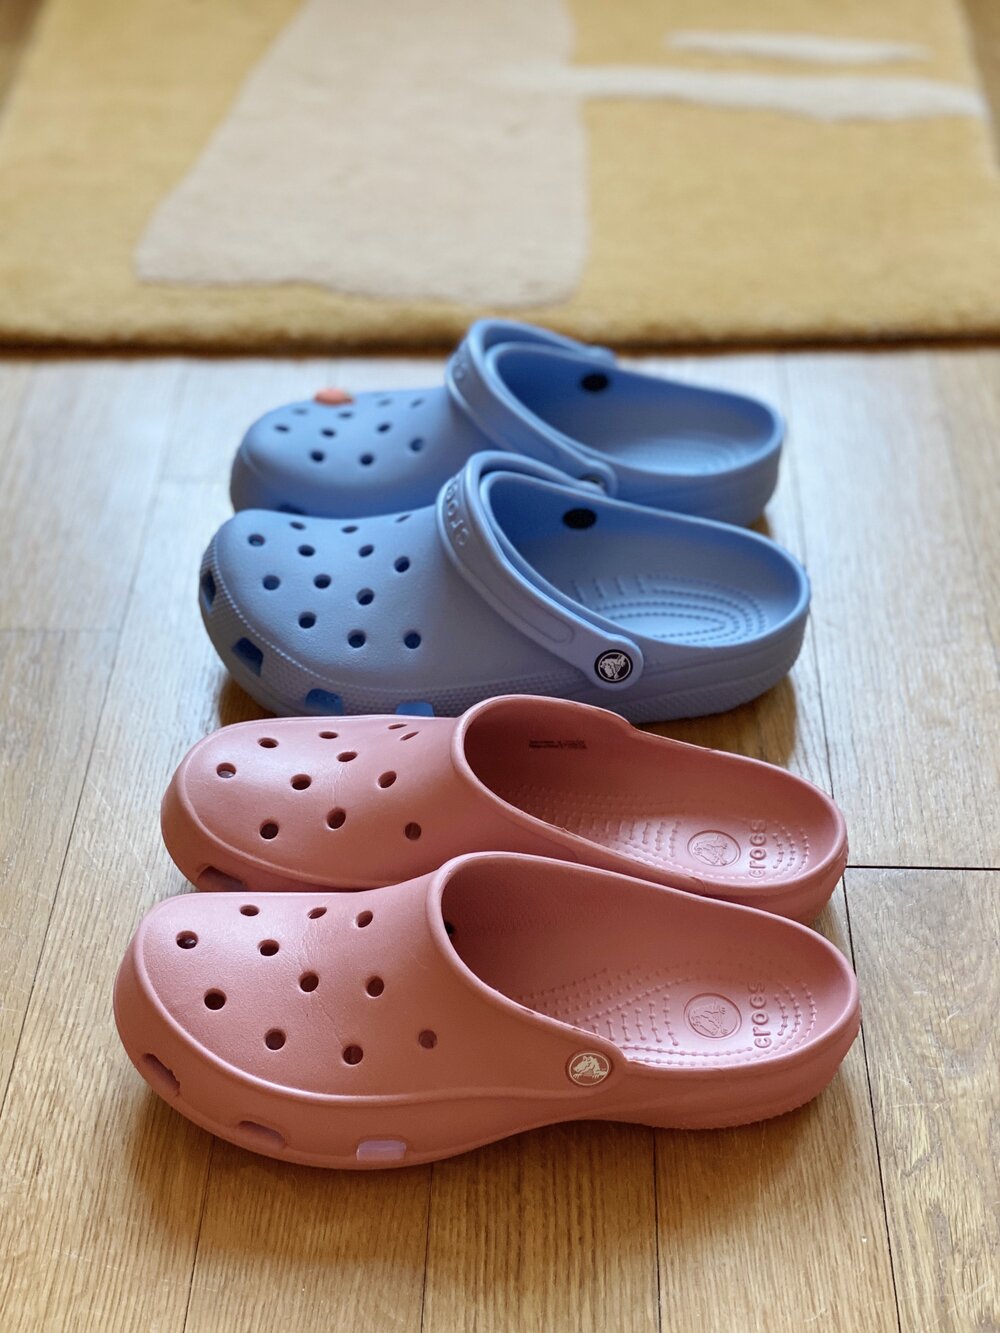 sandals similar to crocs